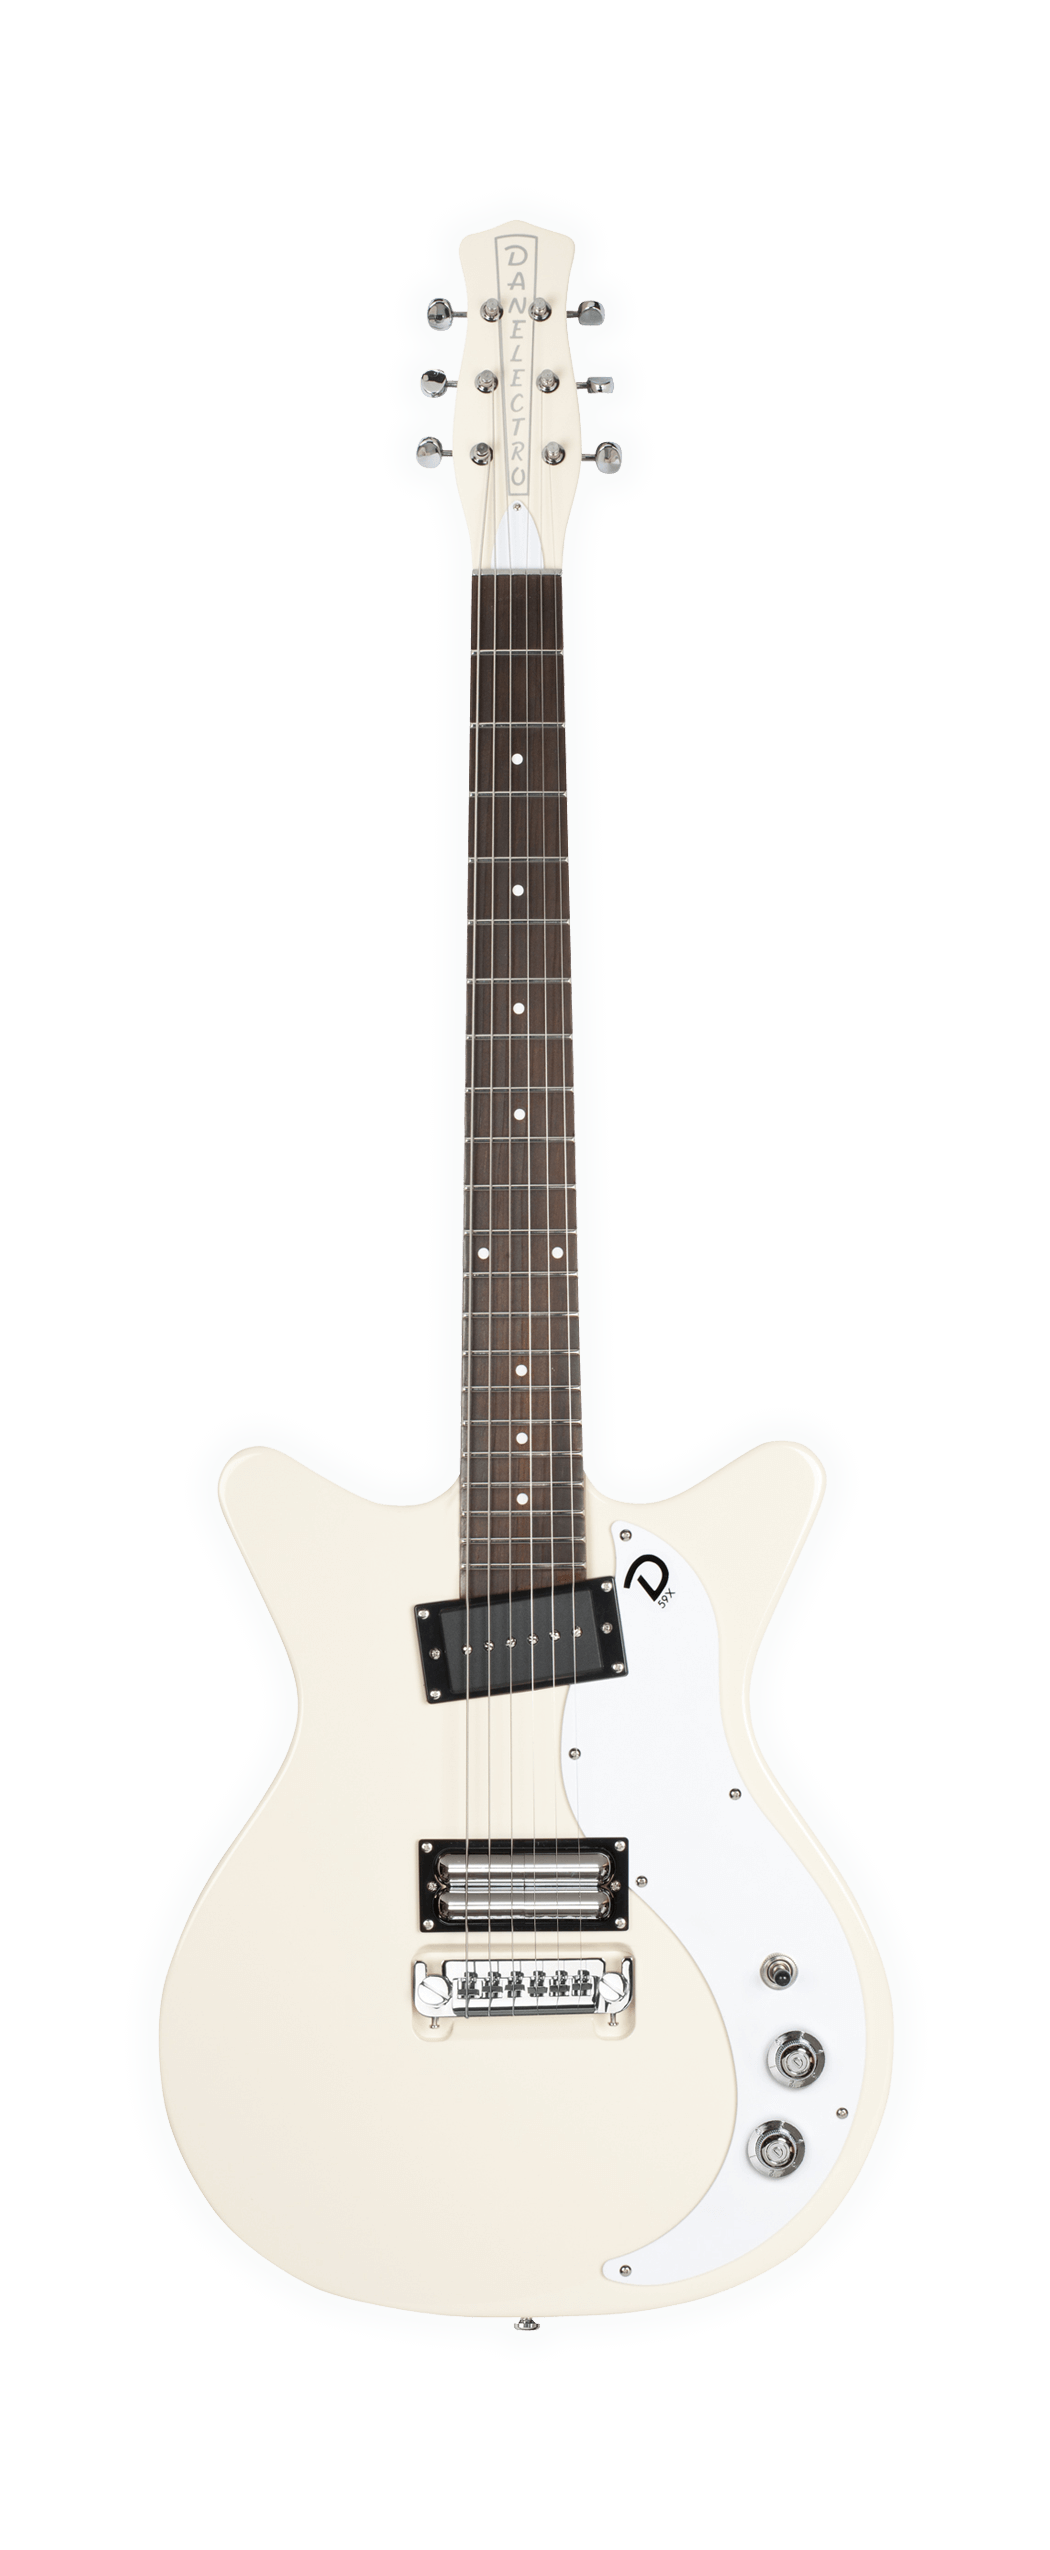 59X Guitar | Danelectro Guitars